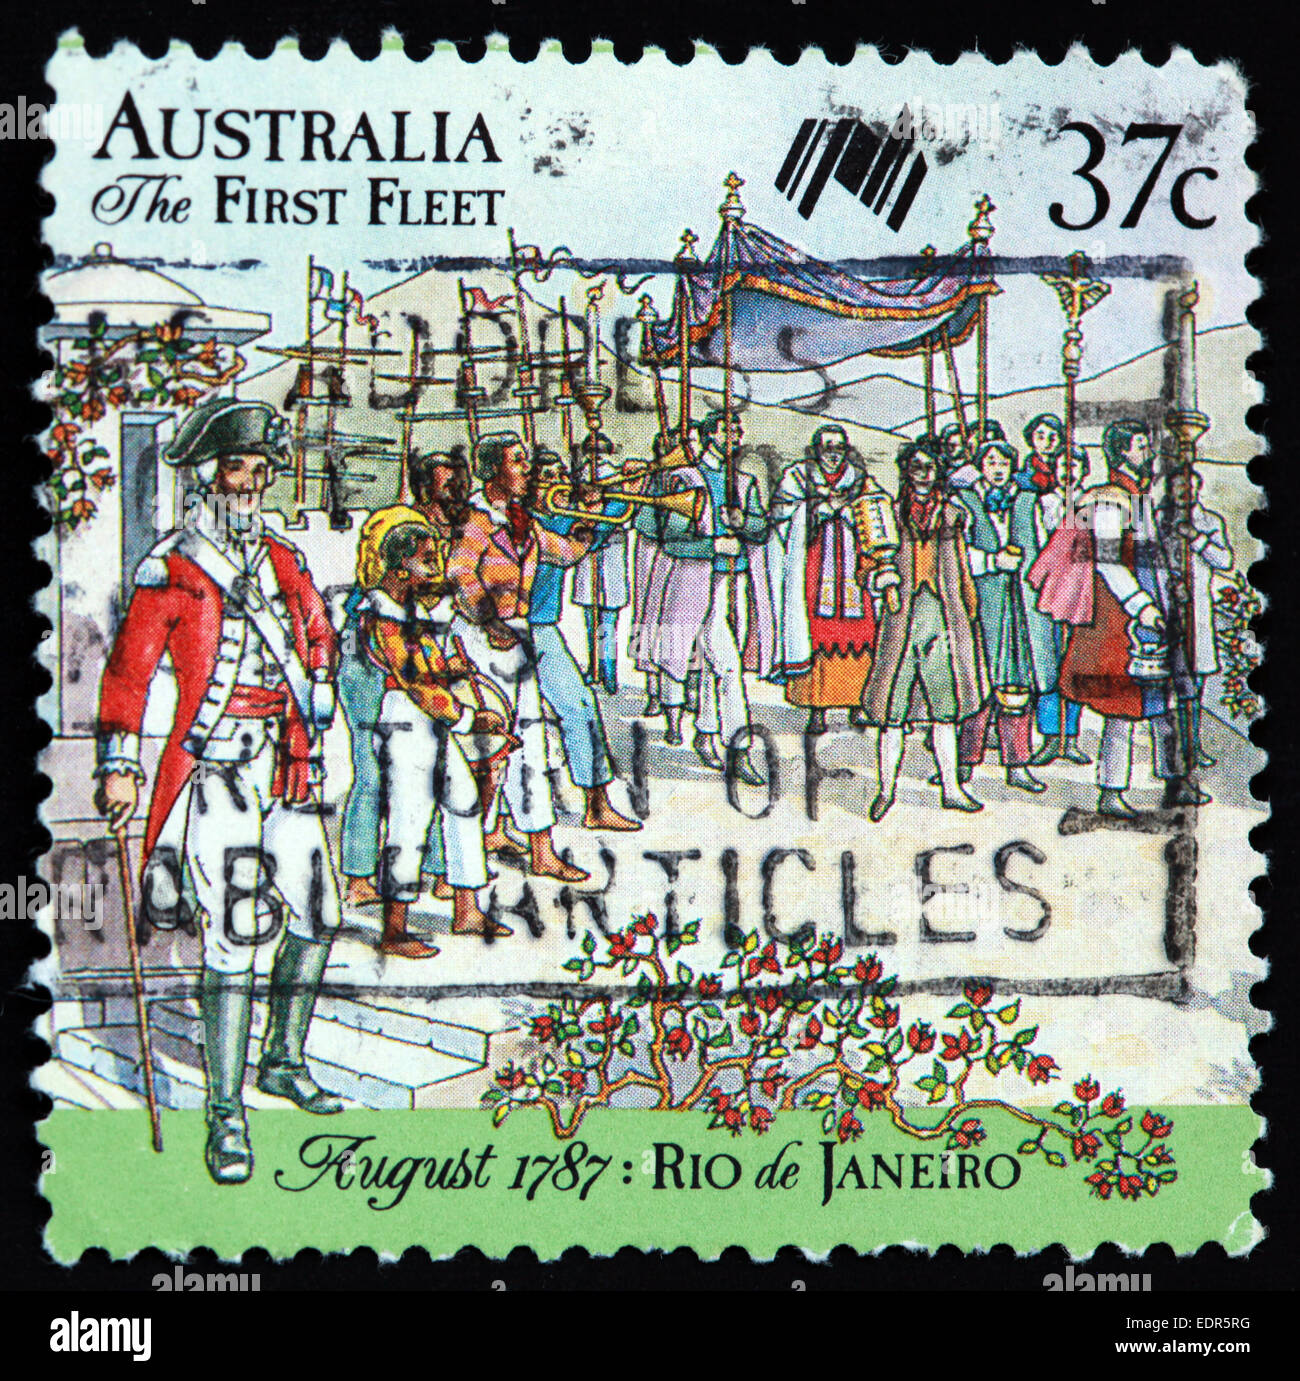 Used and postmarked Australia / Austrailian Stamp 37c The First Fleet August 1787 Rio de Janeiro Stock Photo